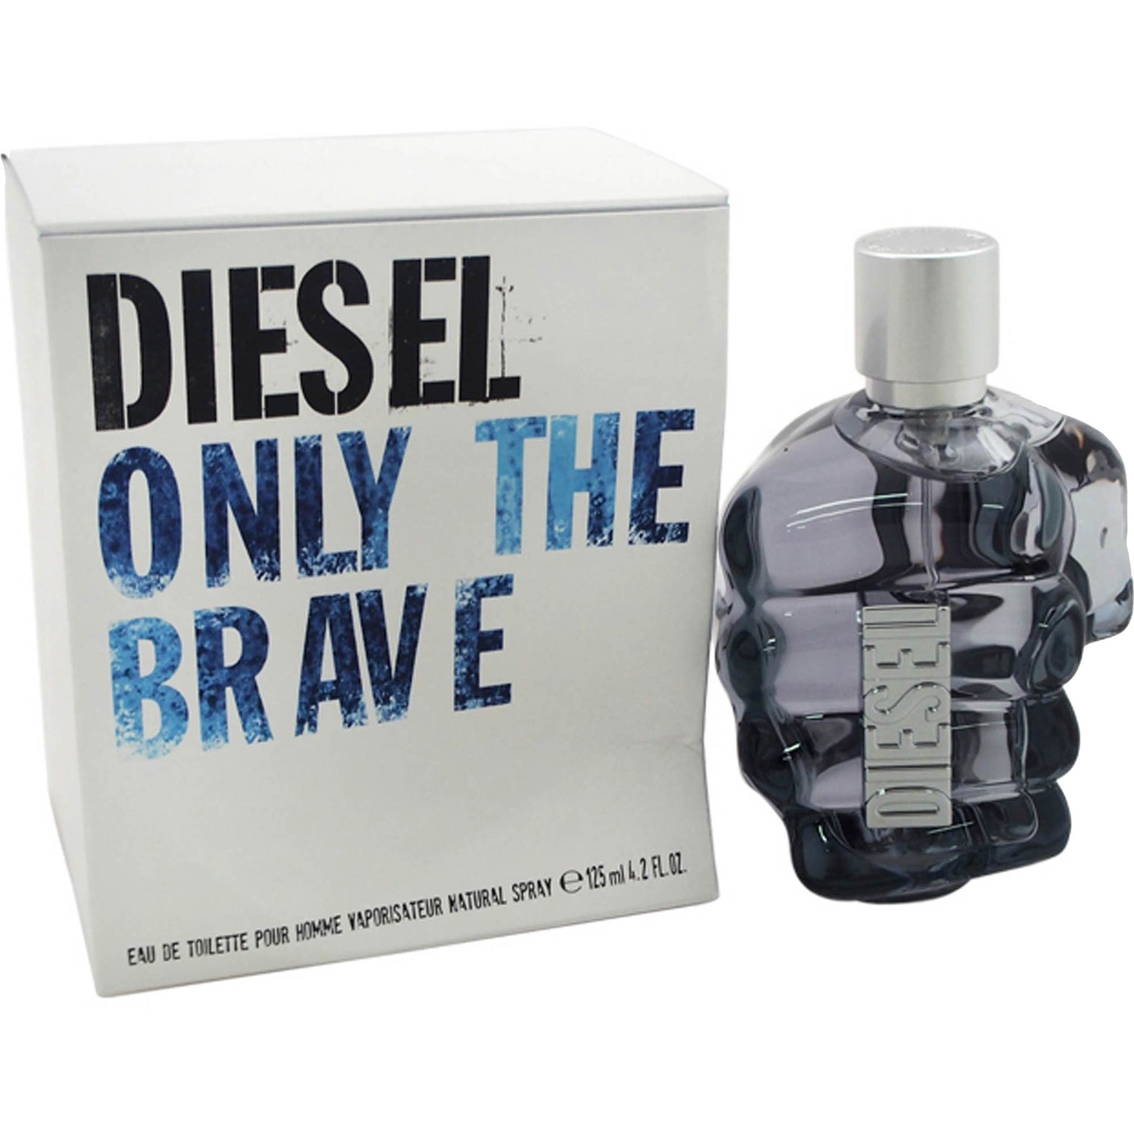 Diesel Only The Brave by Diesel for Men Eau de Toilette Spray - Image 2 of 2